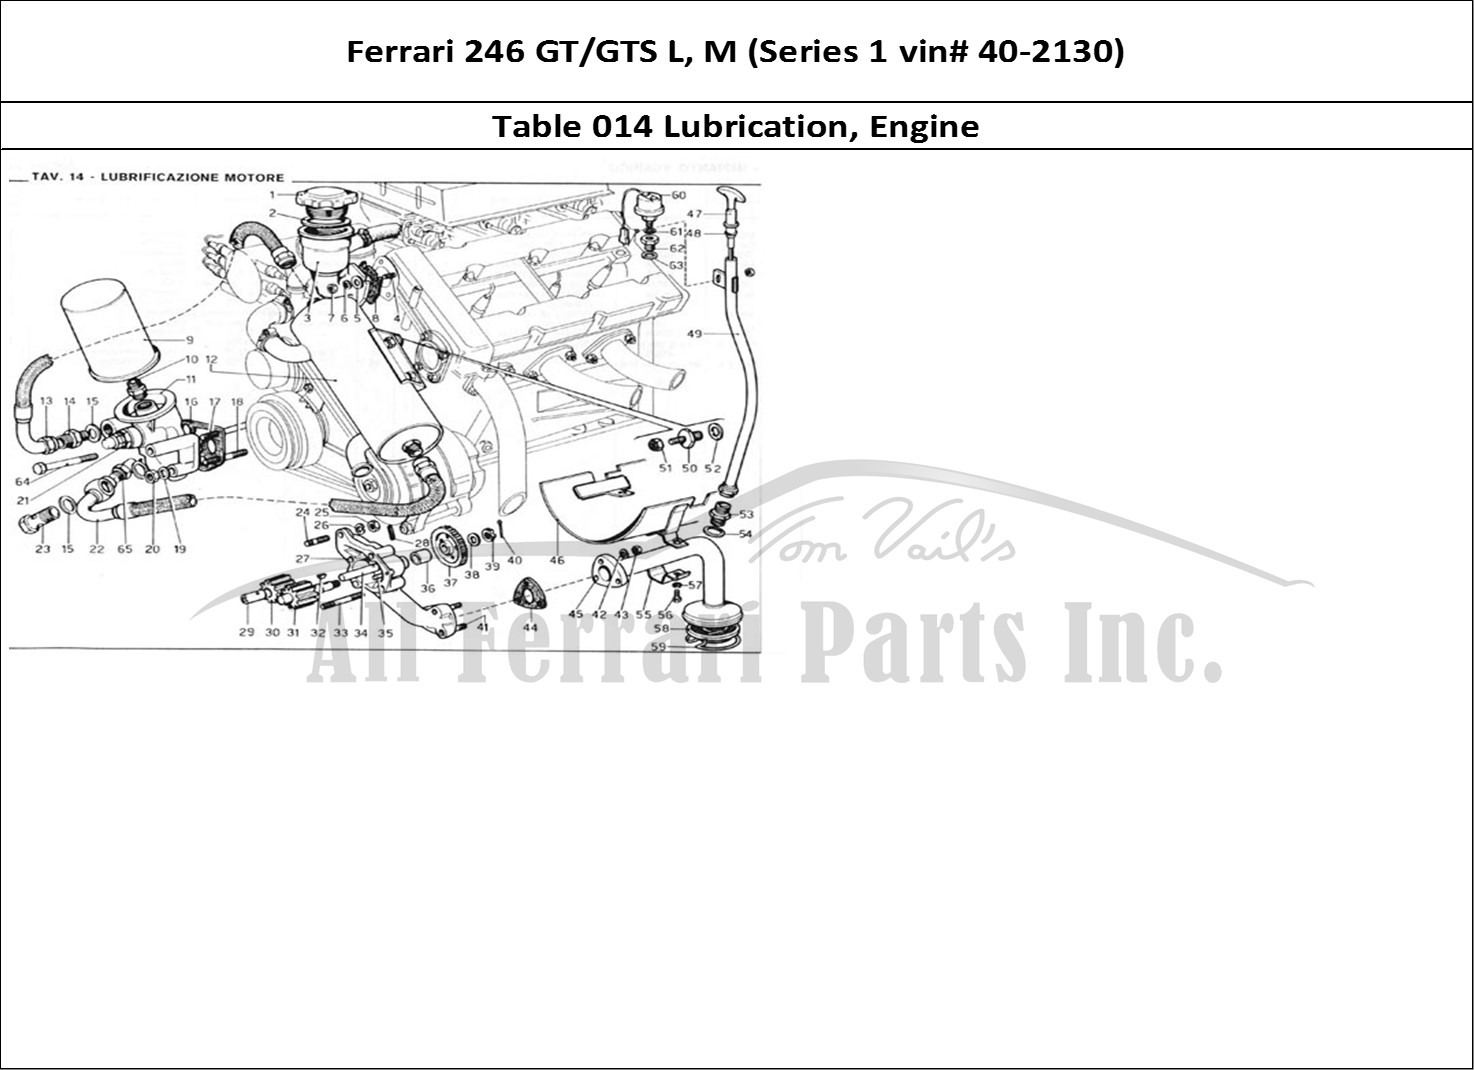 Ferrari Parts Ferrari 246 GT Series 1 Page 014 Engine Lubrication